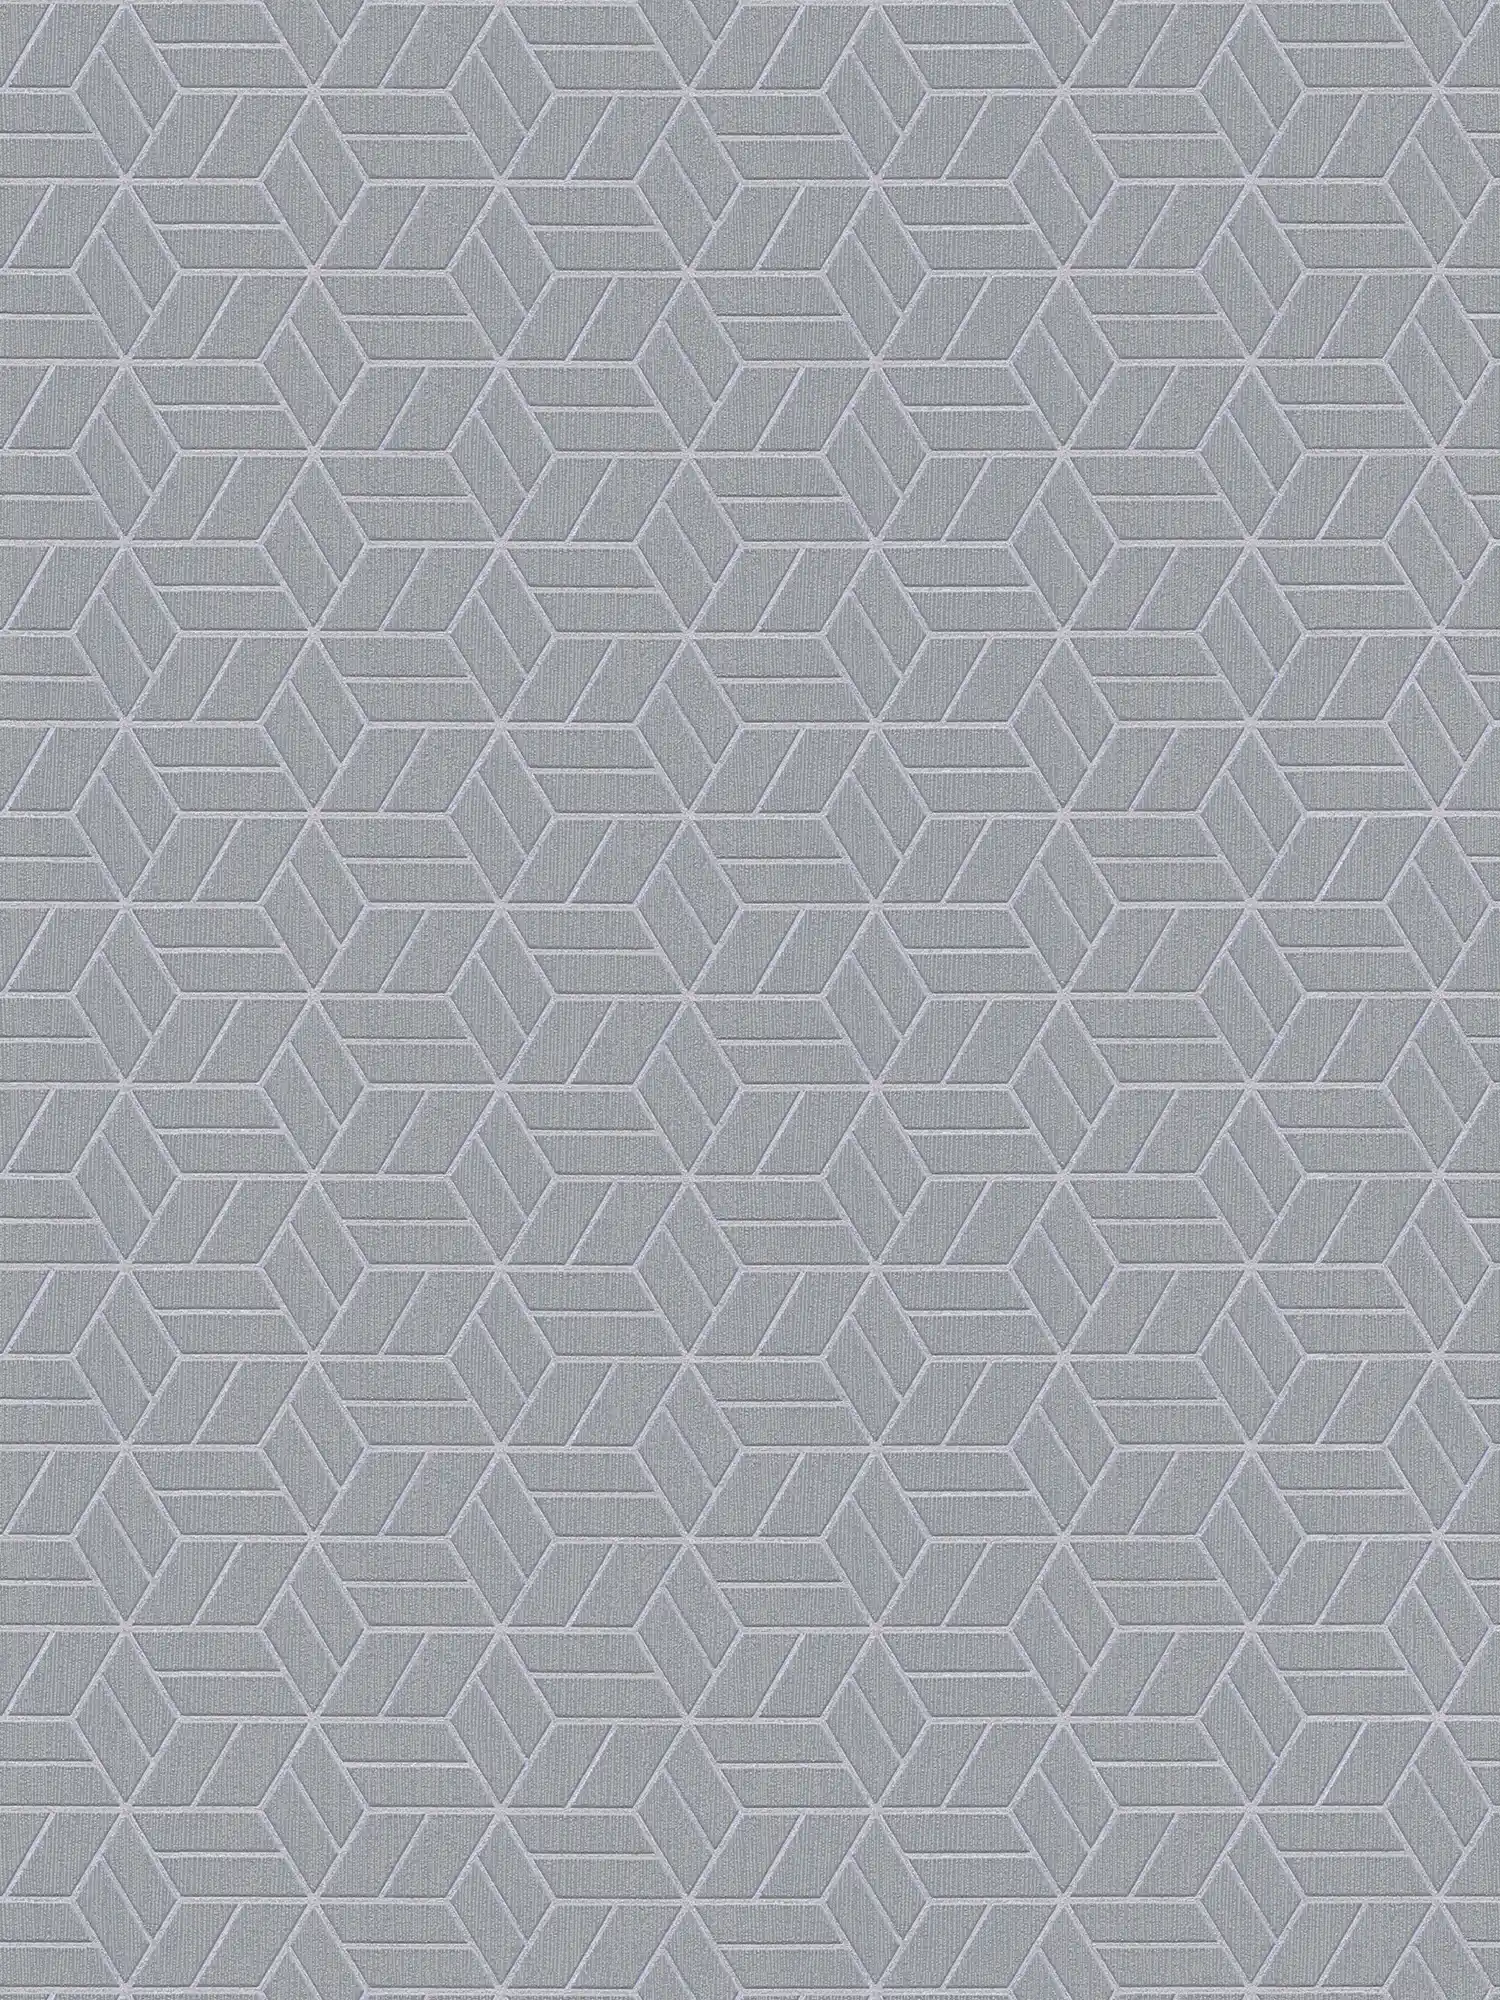 behang geometrisch patroon & glittereffect - grijs, zilver
